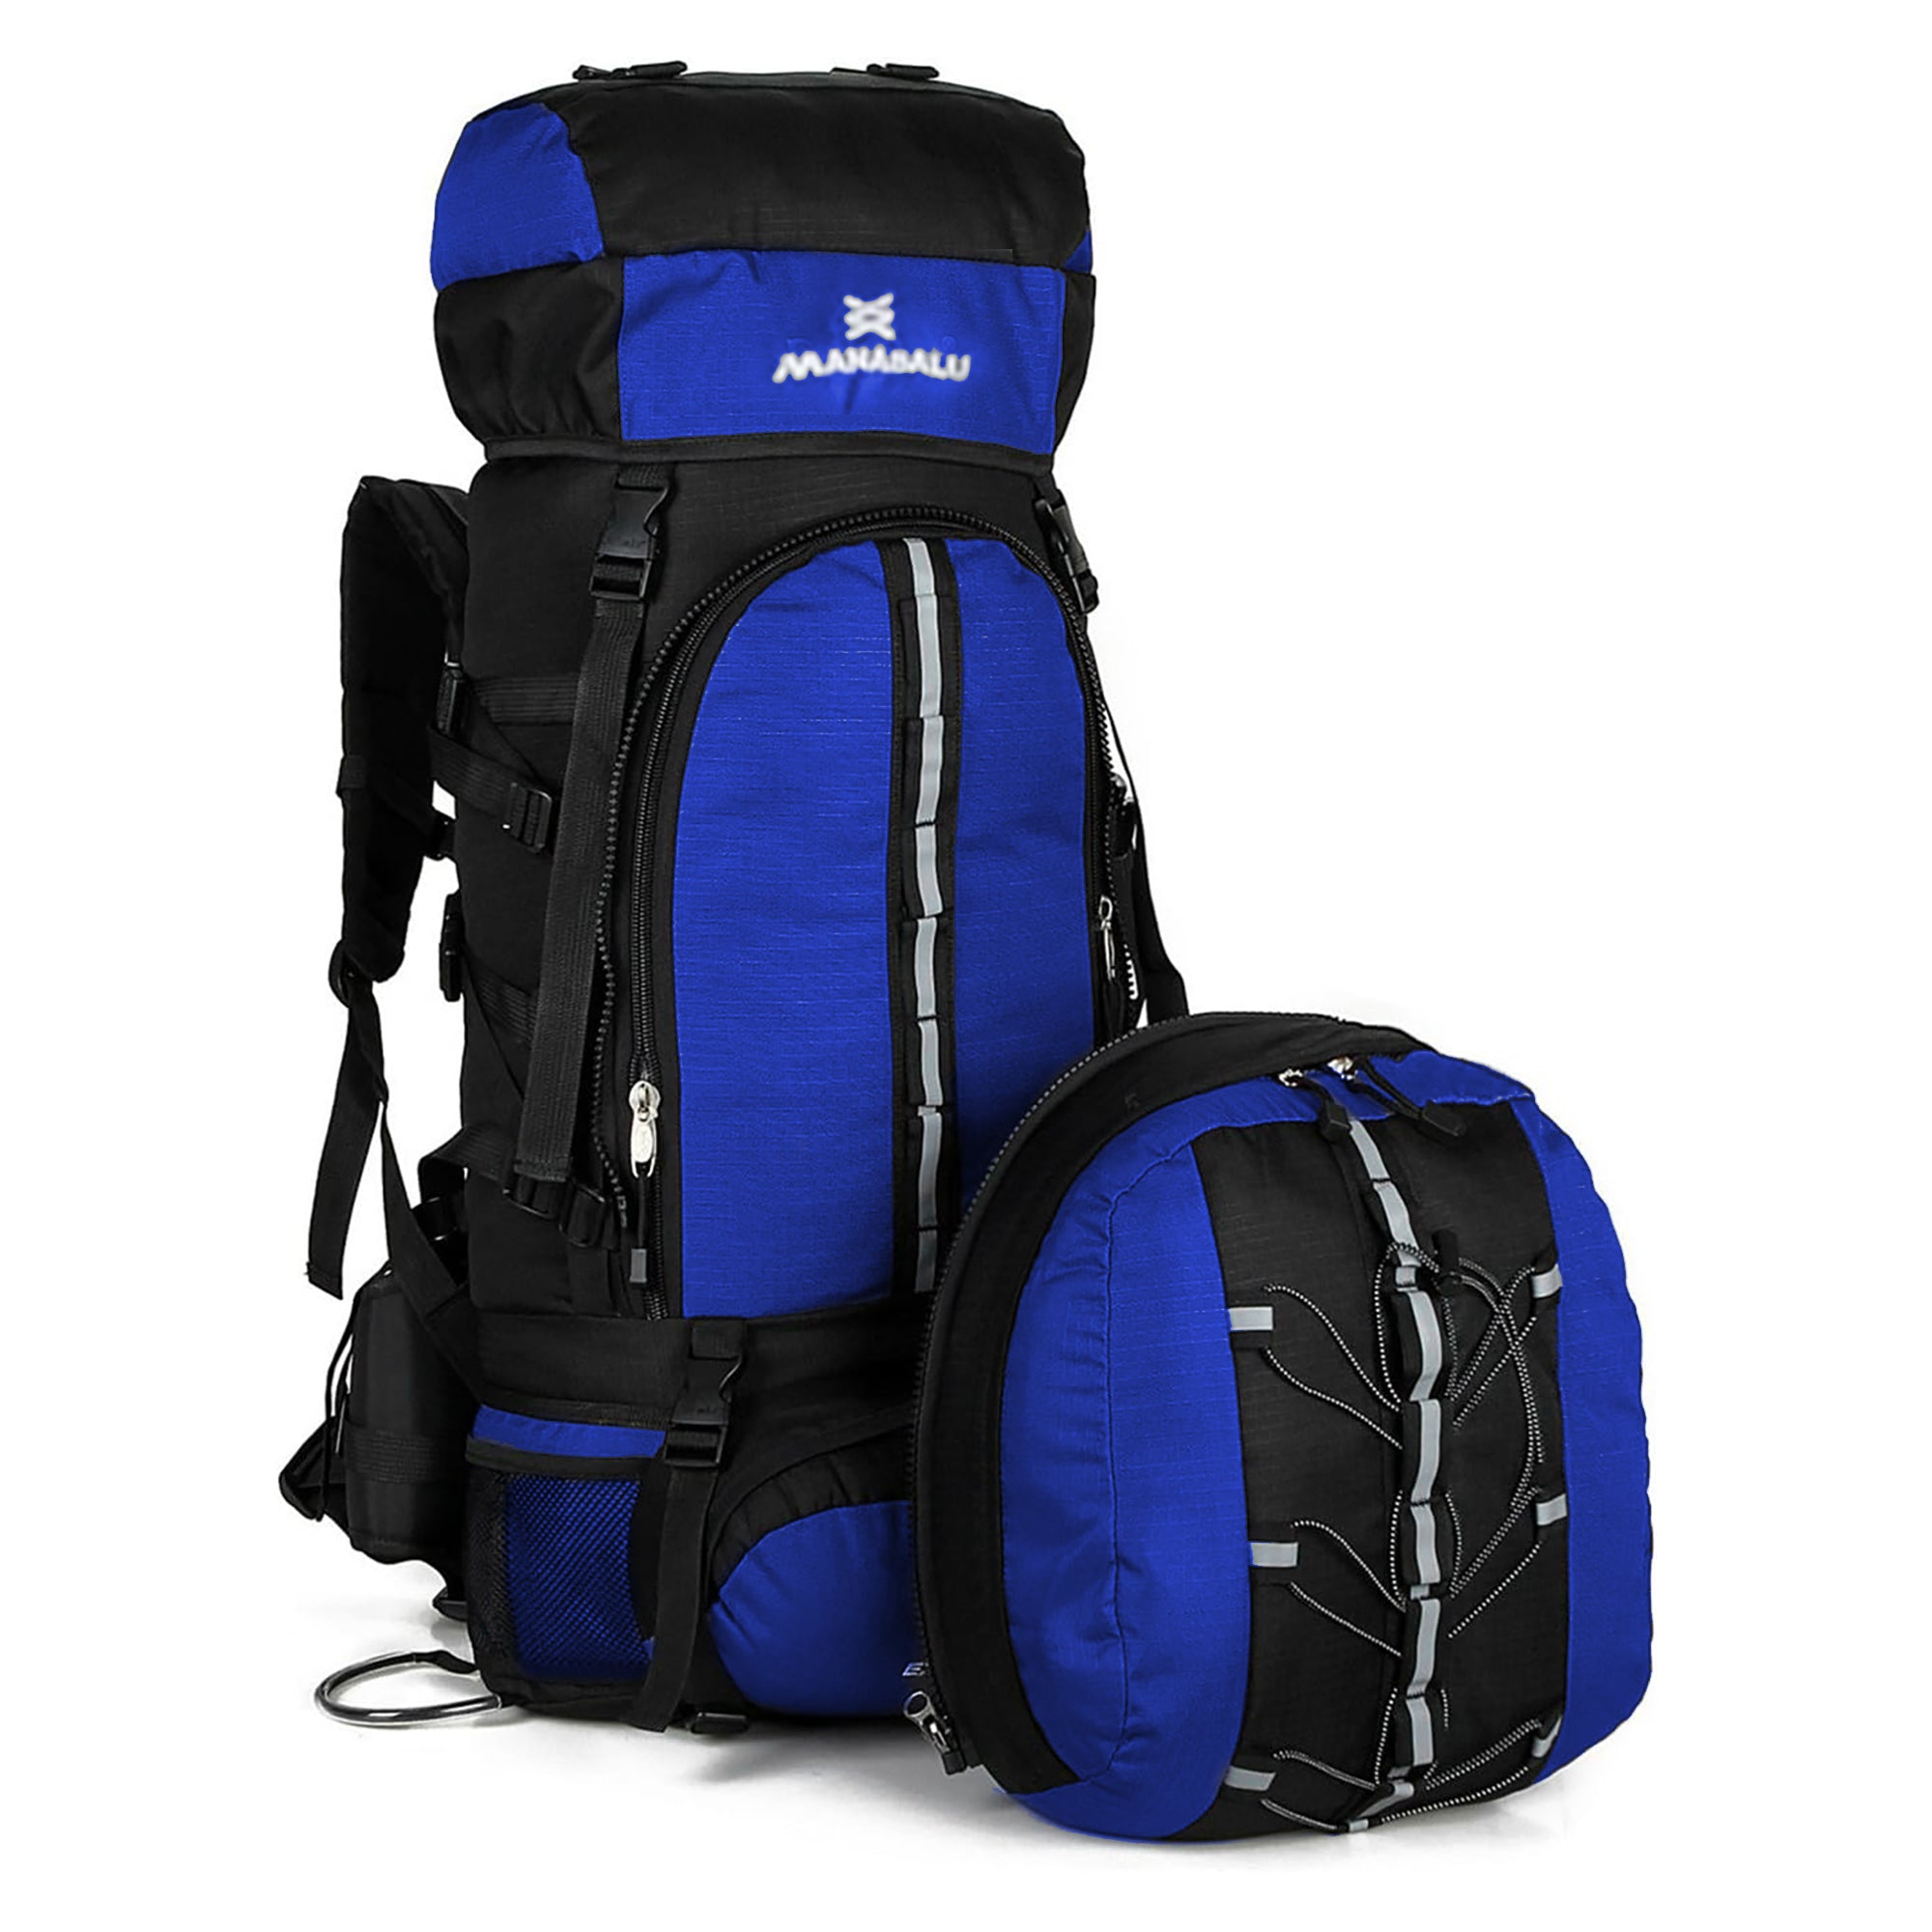 Manasalu Extreme 70L+10L 2 In 1 Waterproof Camping Backpack Set FX-8854-2